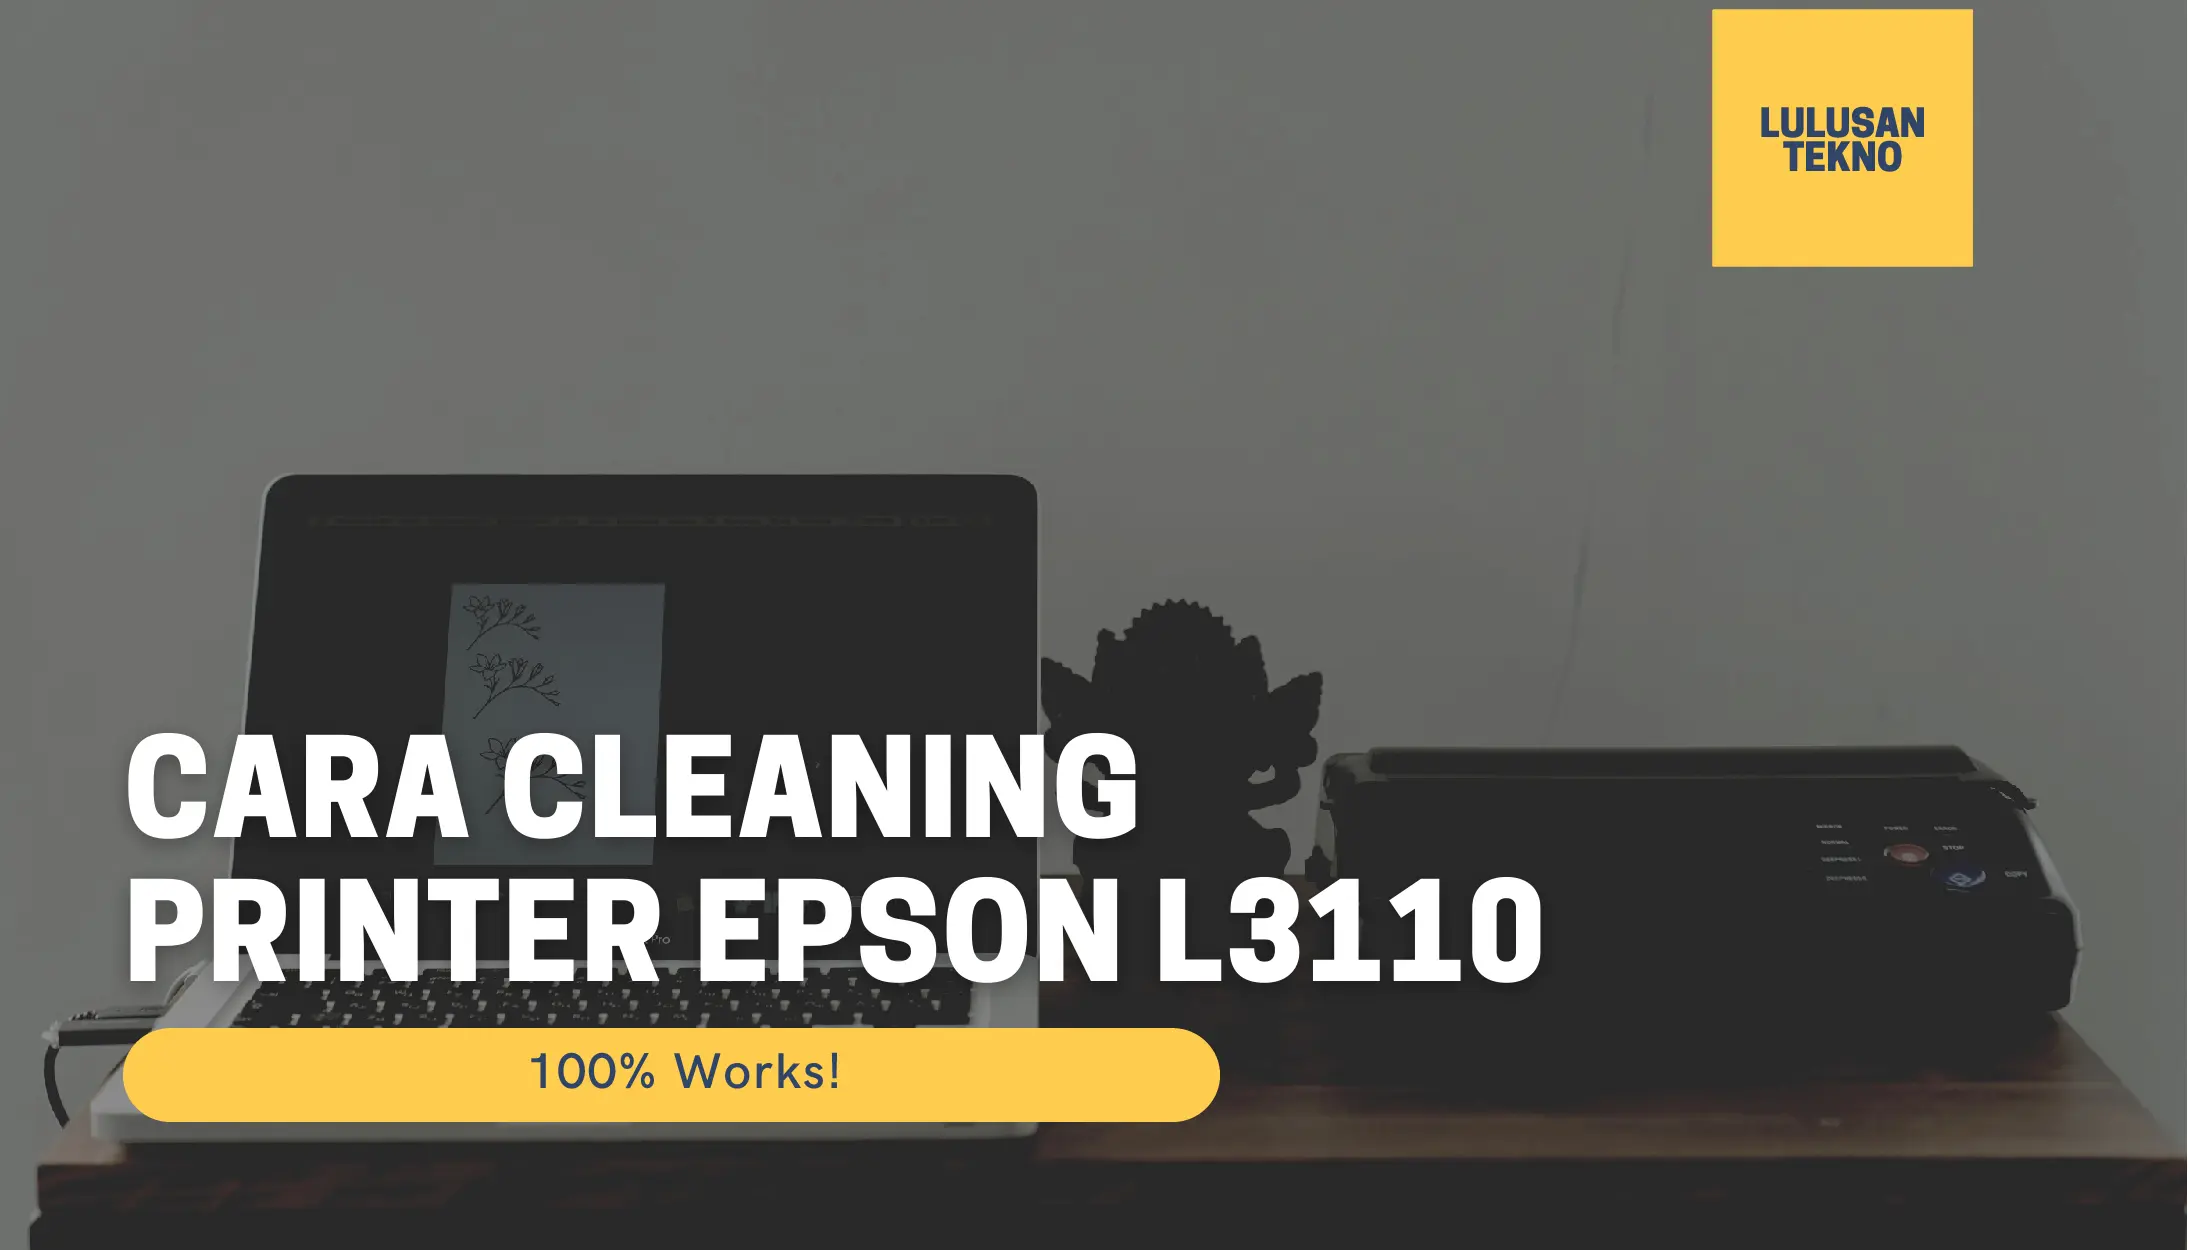 Cara Cleaning Printer Epson L3110 Windows 10 Cara Sca 7898